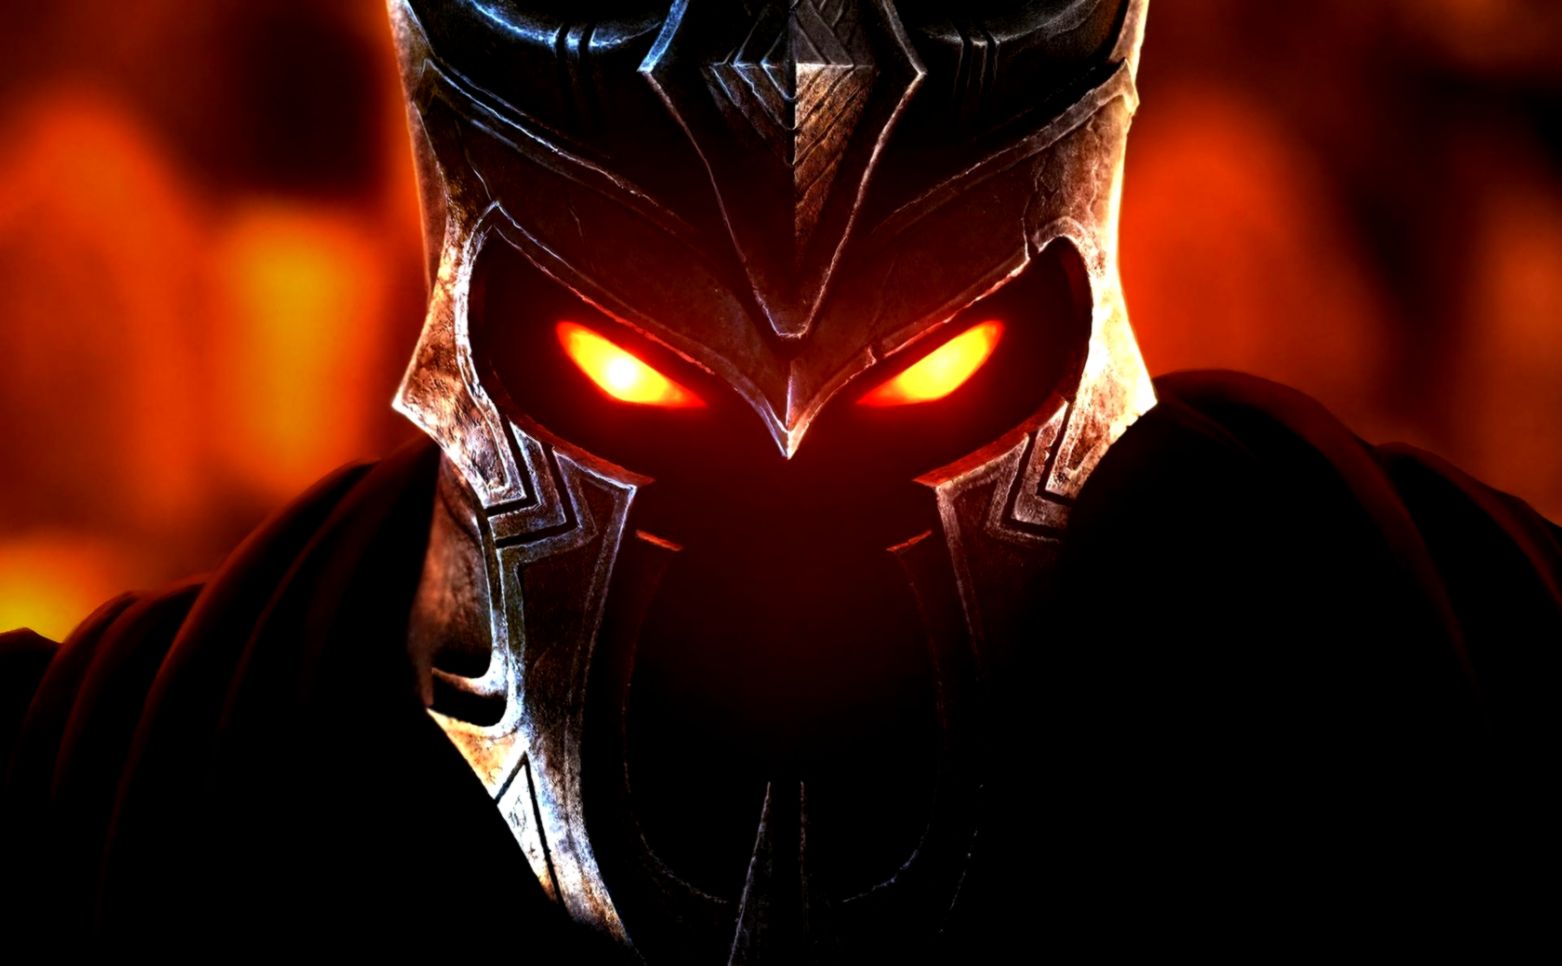 Overlord Wallpaper - Knight Fire Eyes - HD Wallpaper 